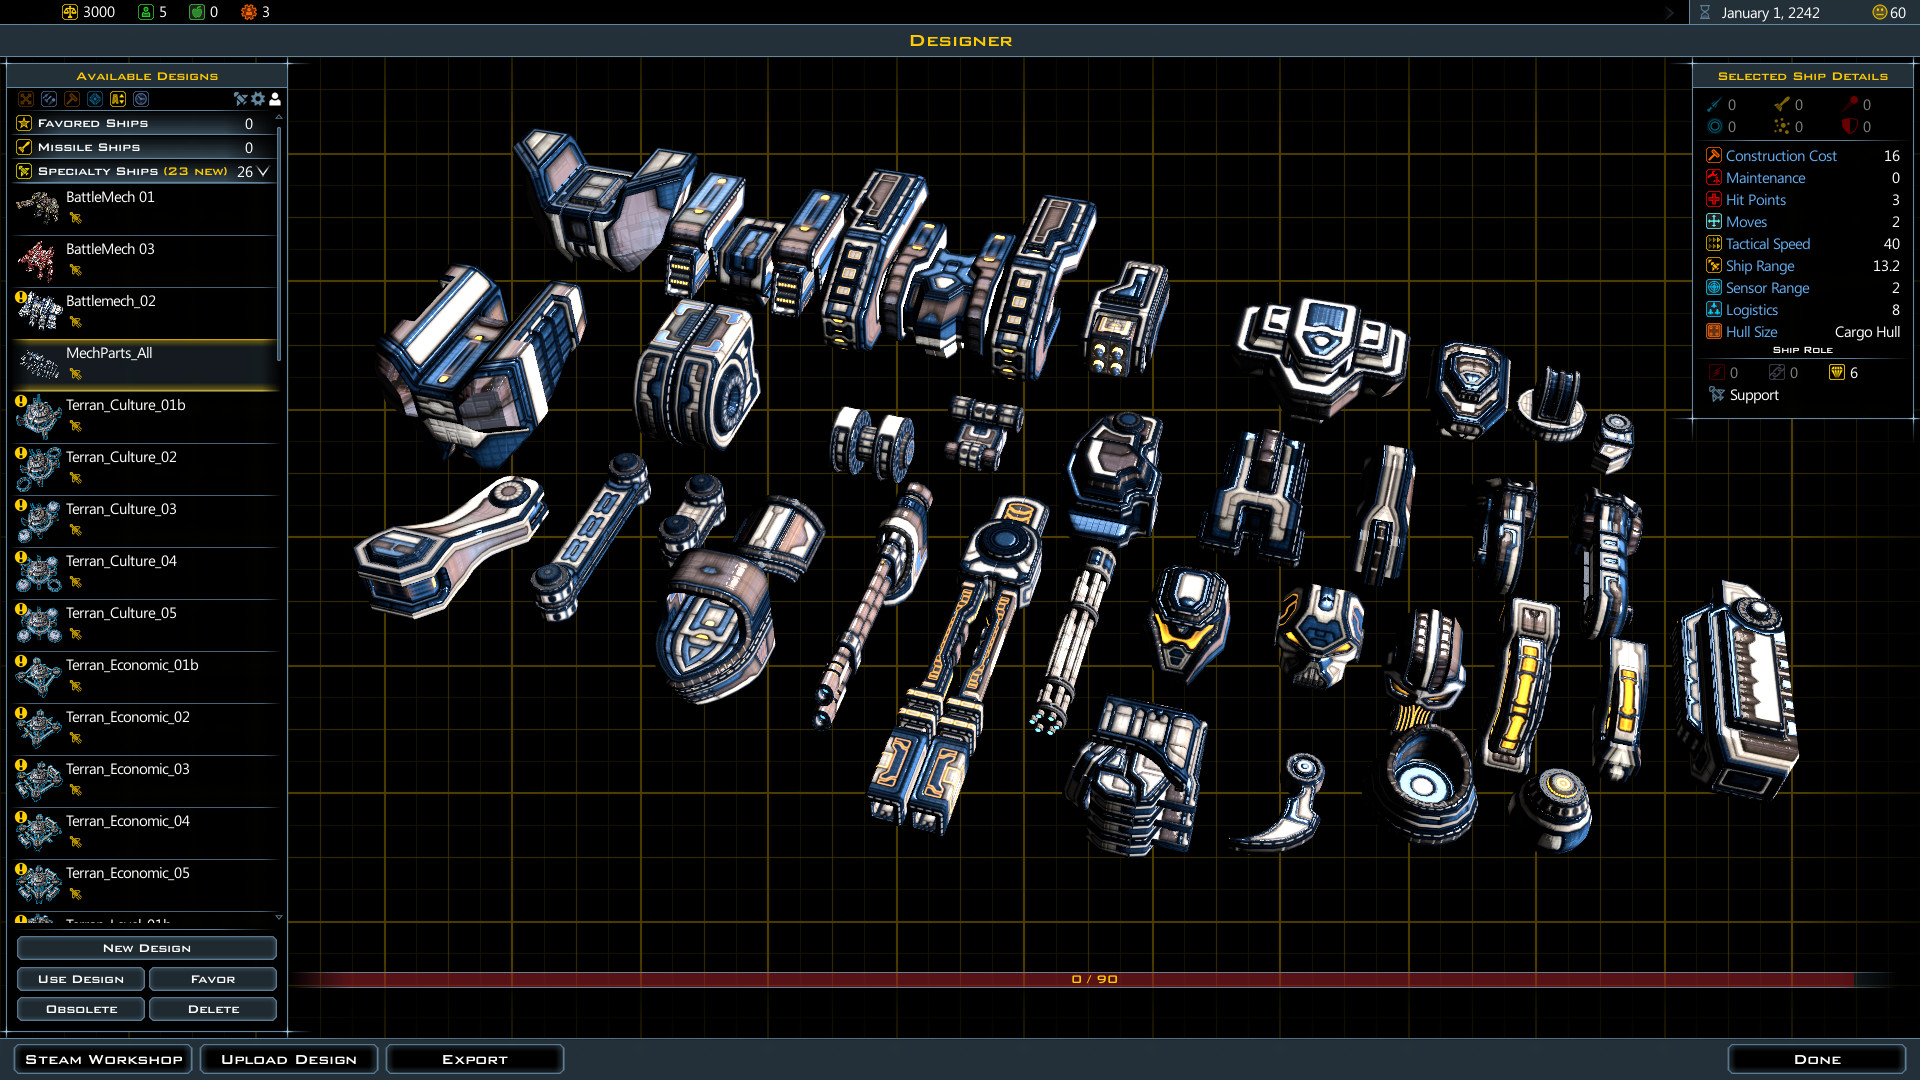 Galactic Civilizations III - Mech Parts Kit DLC Featured Screenshot #1